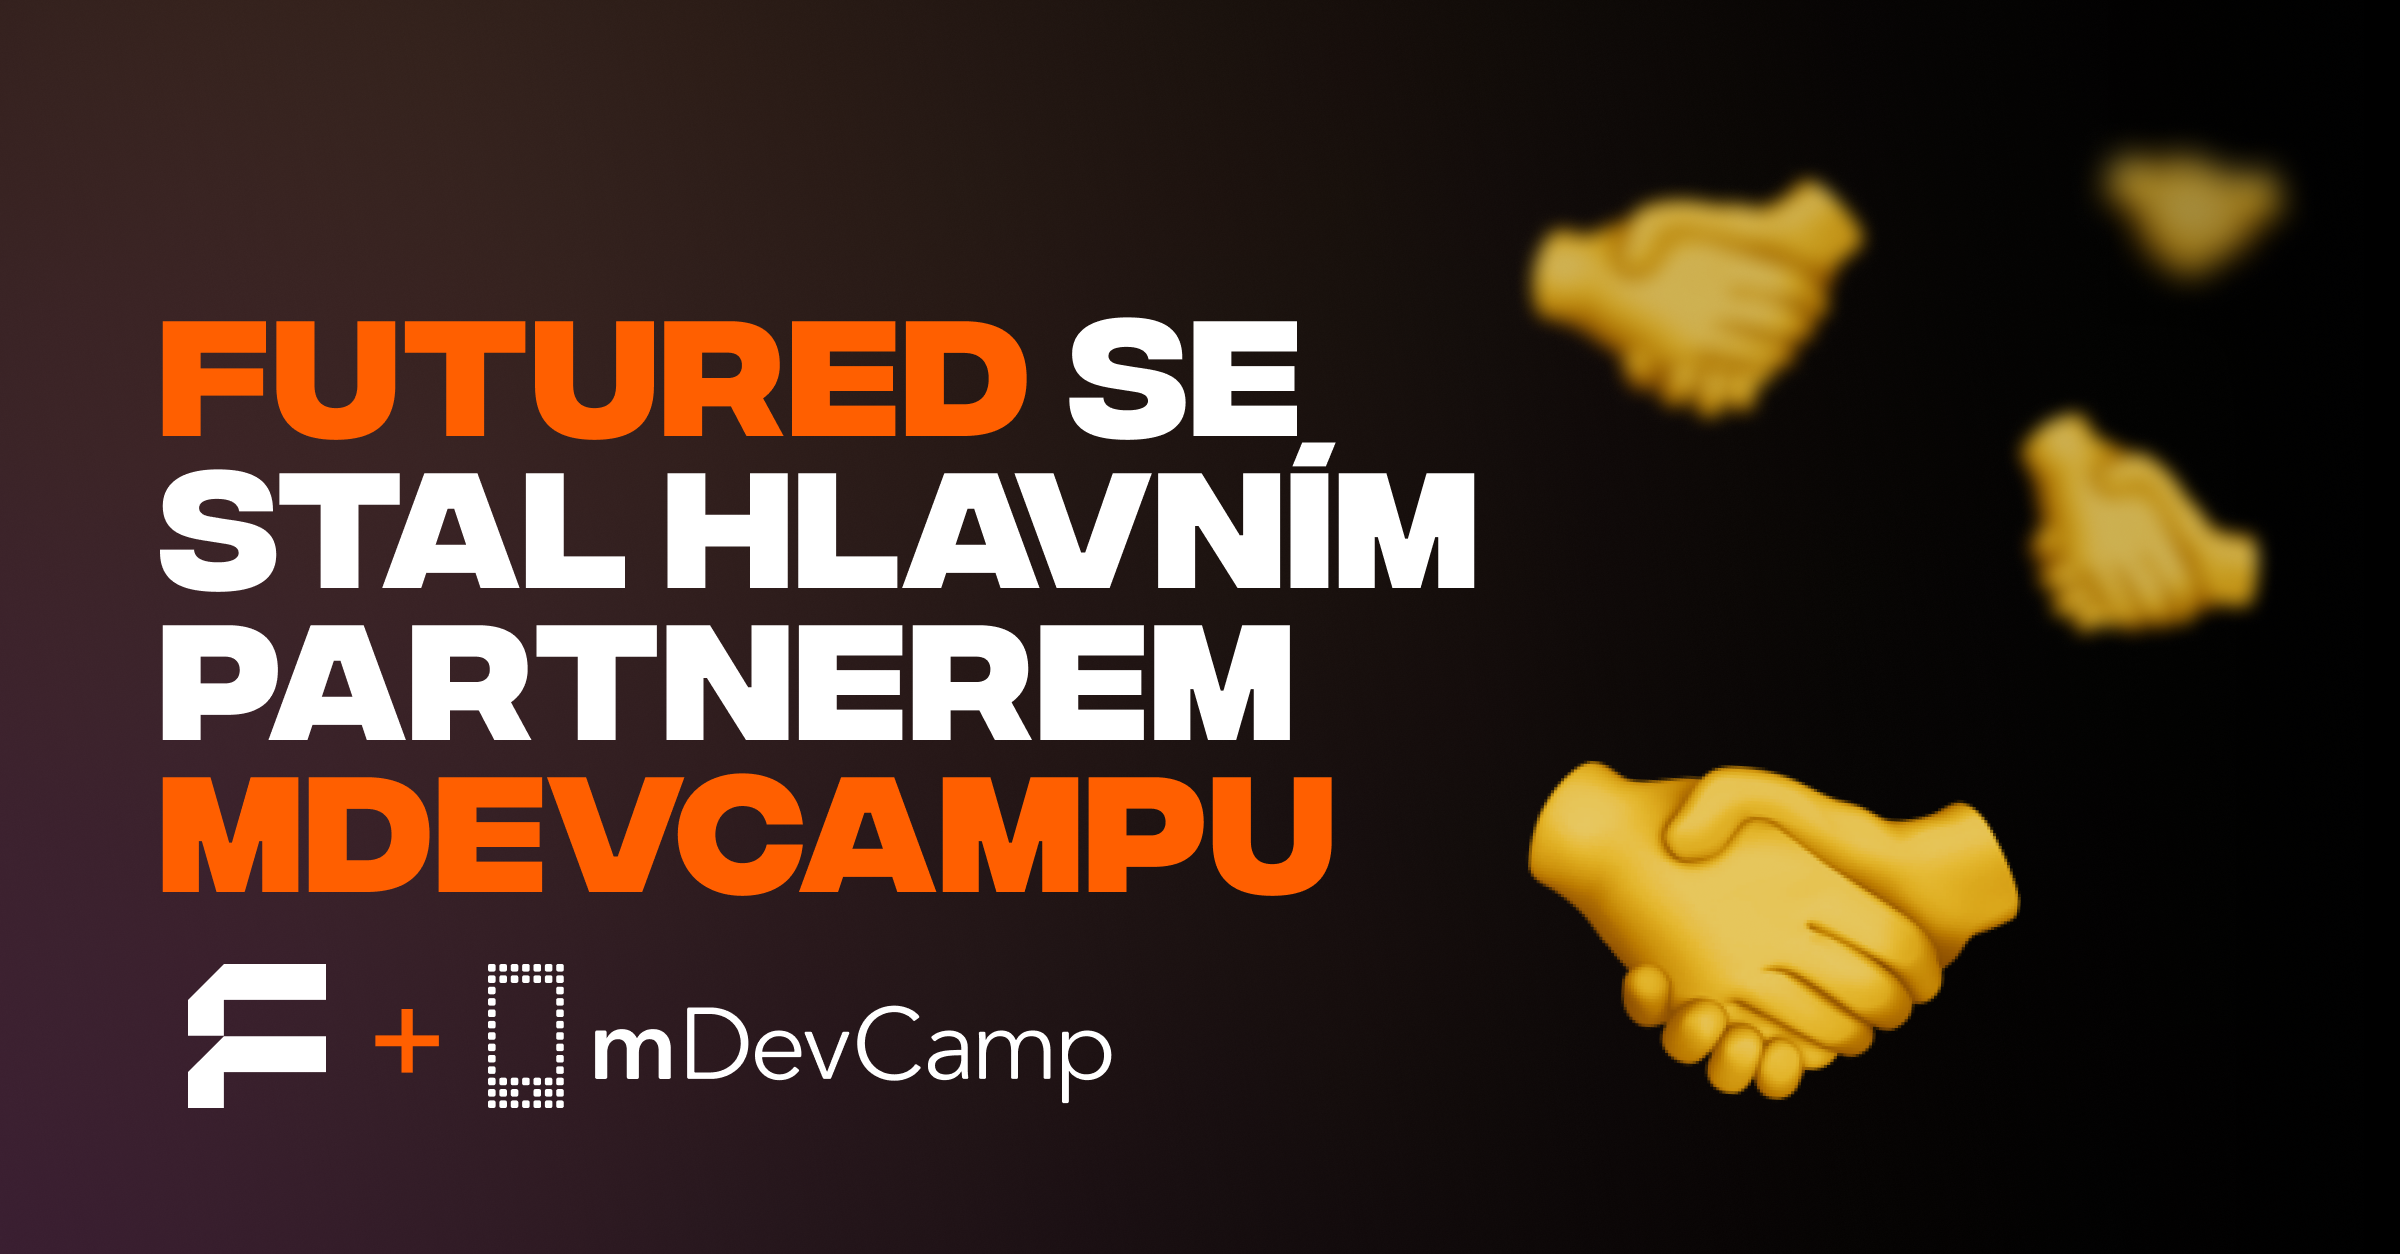 mDevCamp_partnership_LI.png